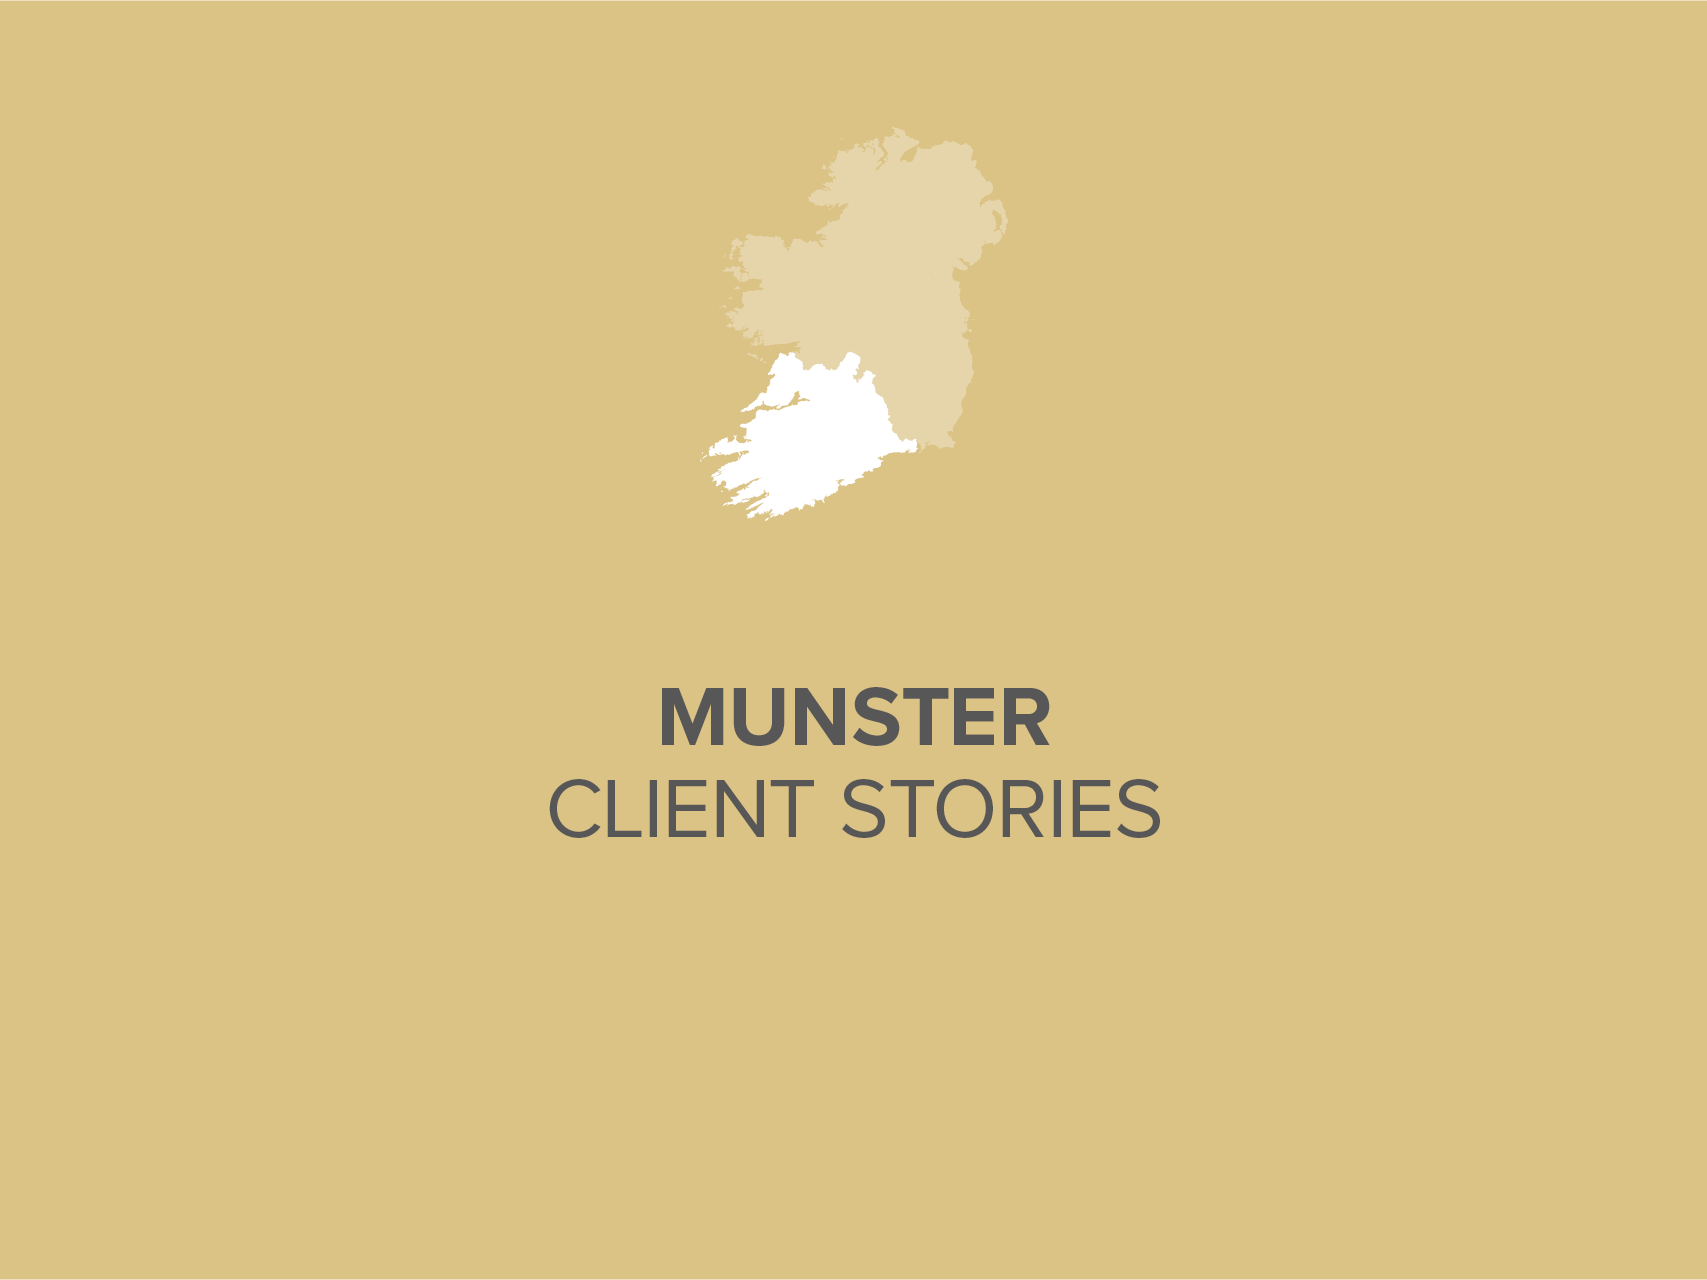 Munster Client Stories